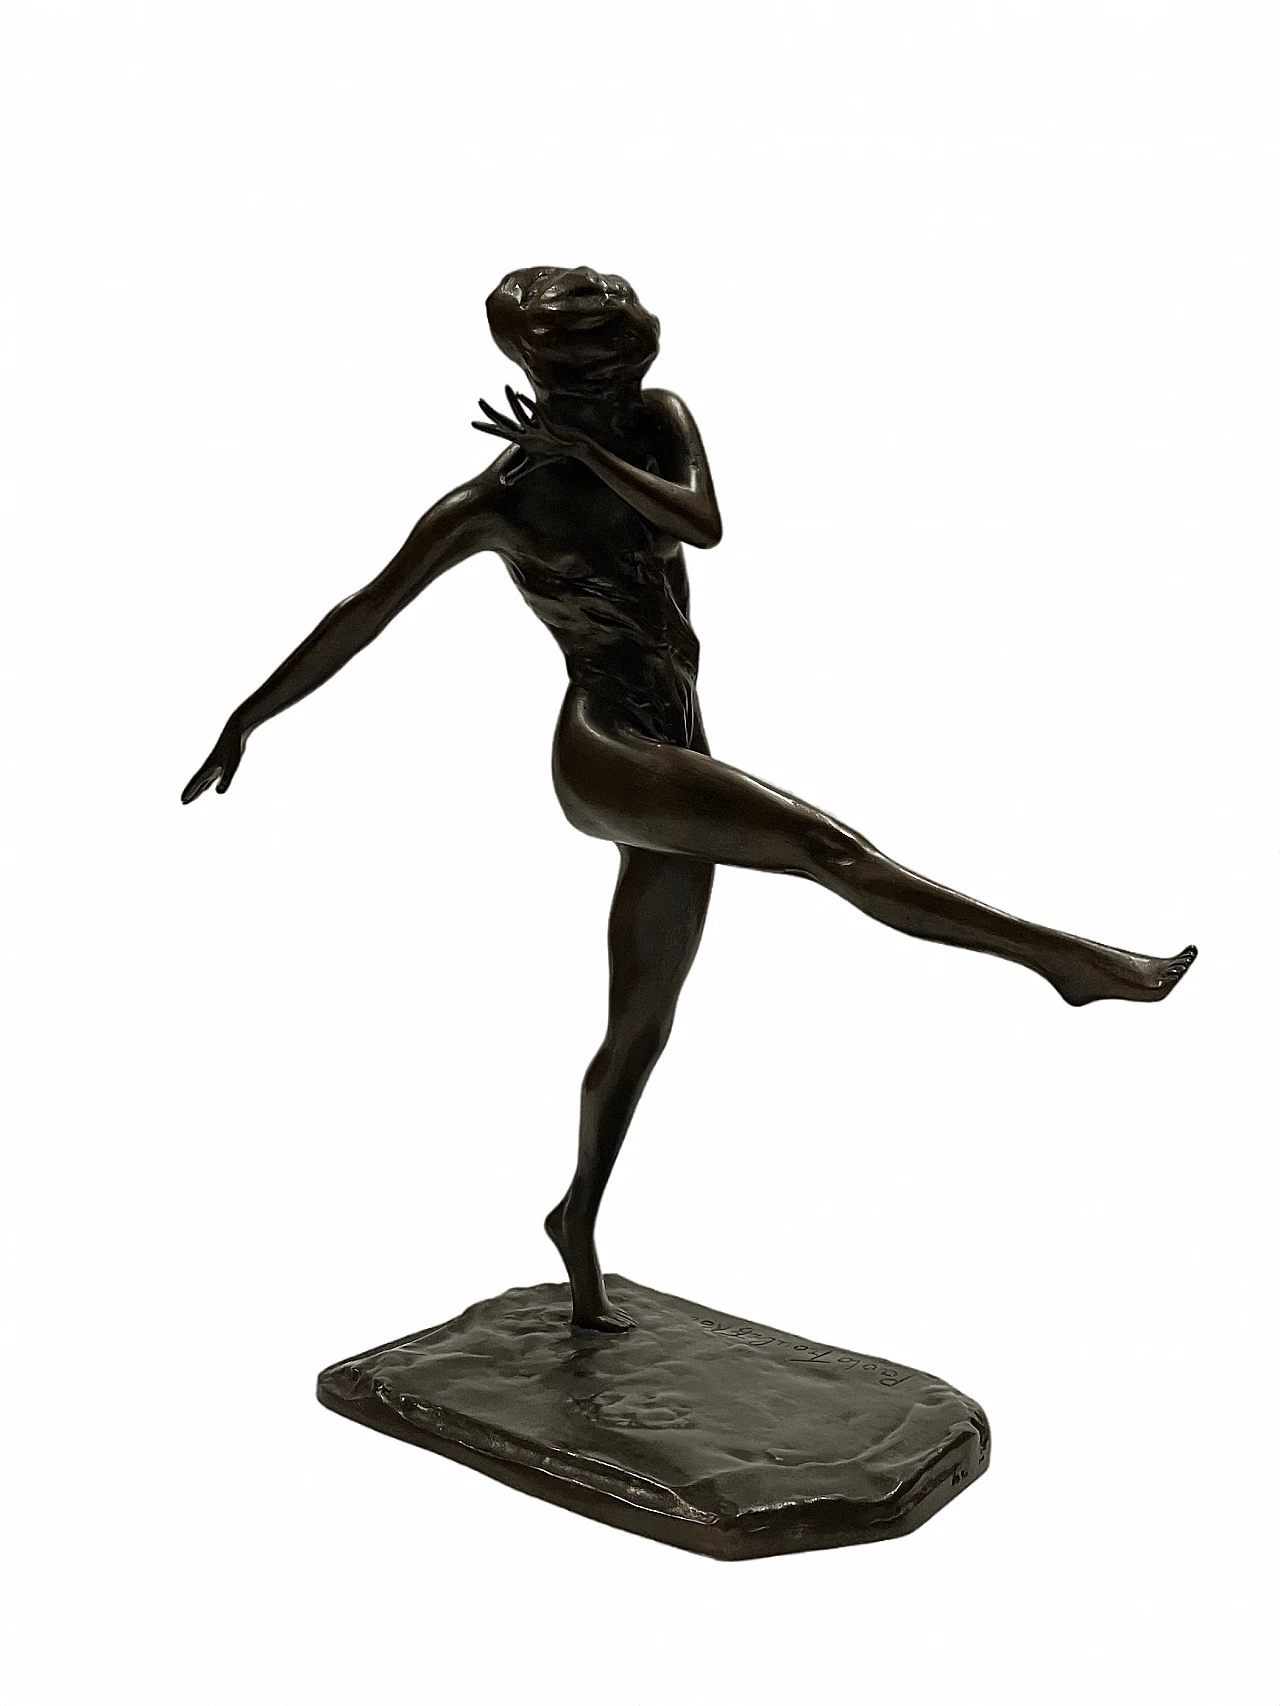 Paul Troubetzkoy, Dancer, bronze sculpture 1